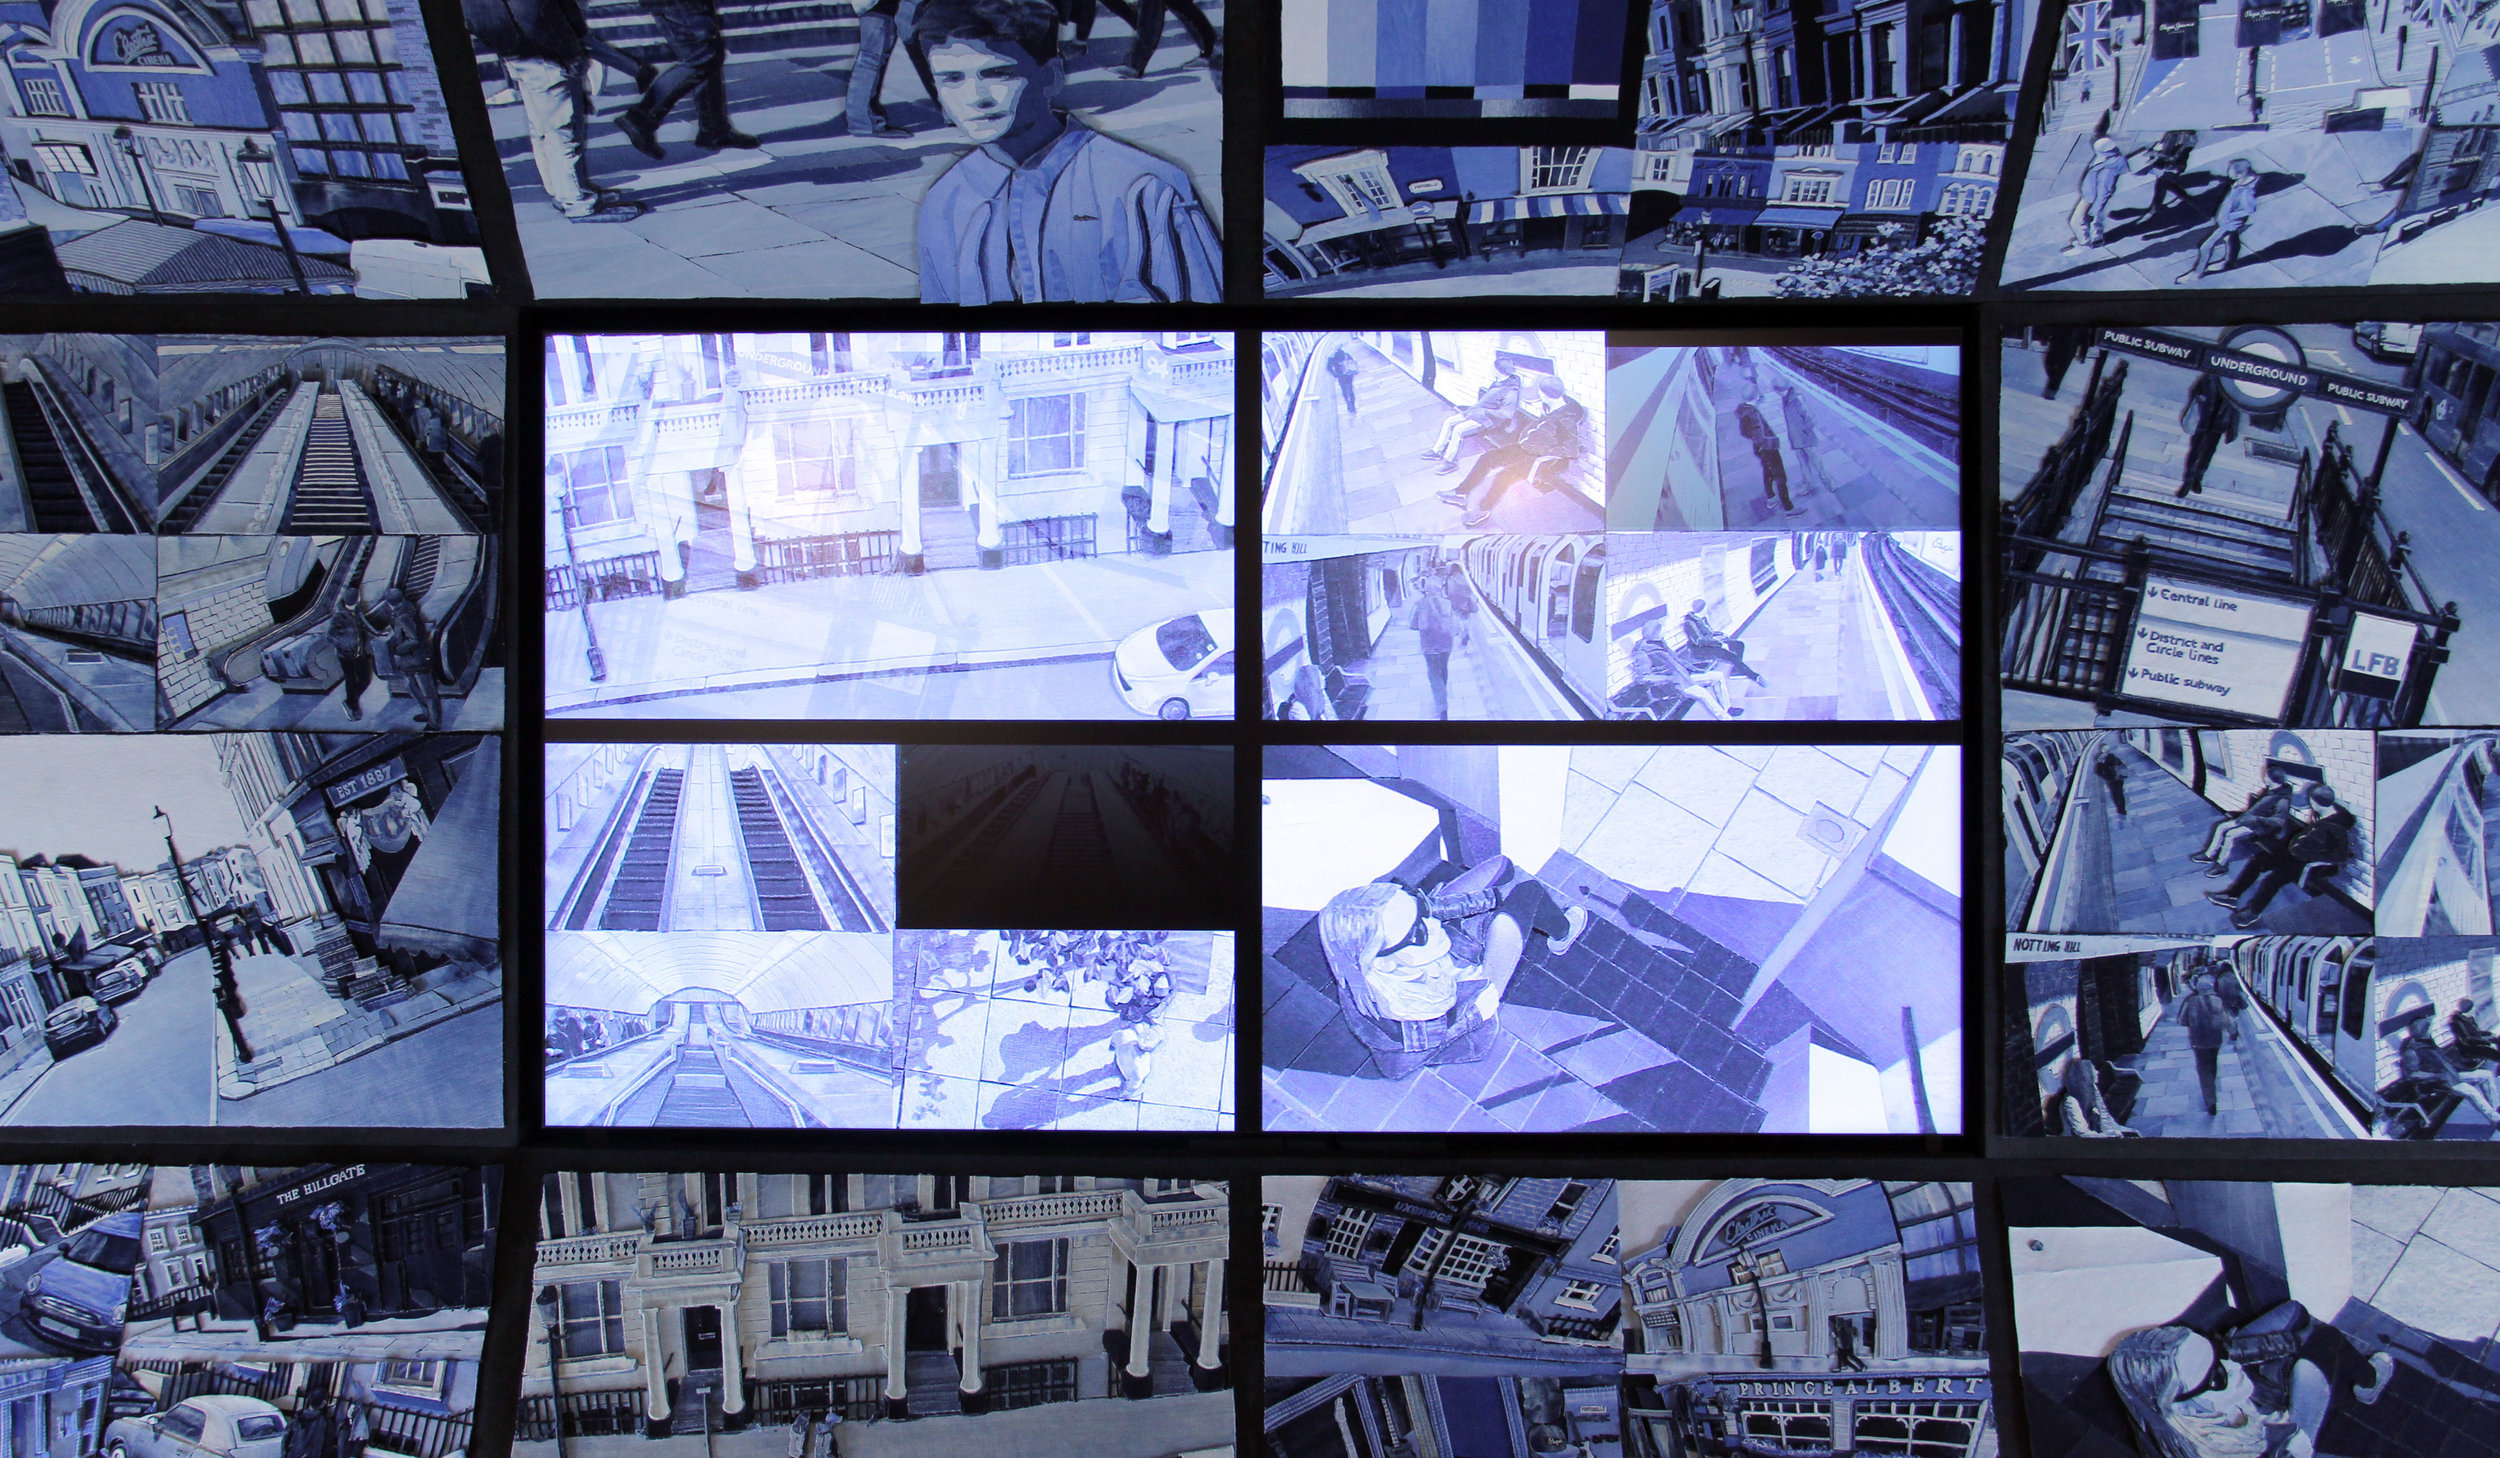 'Surveillance' Ian Berry's CCTV installation 